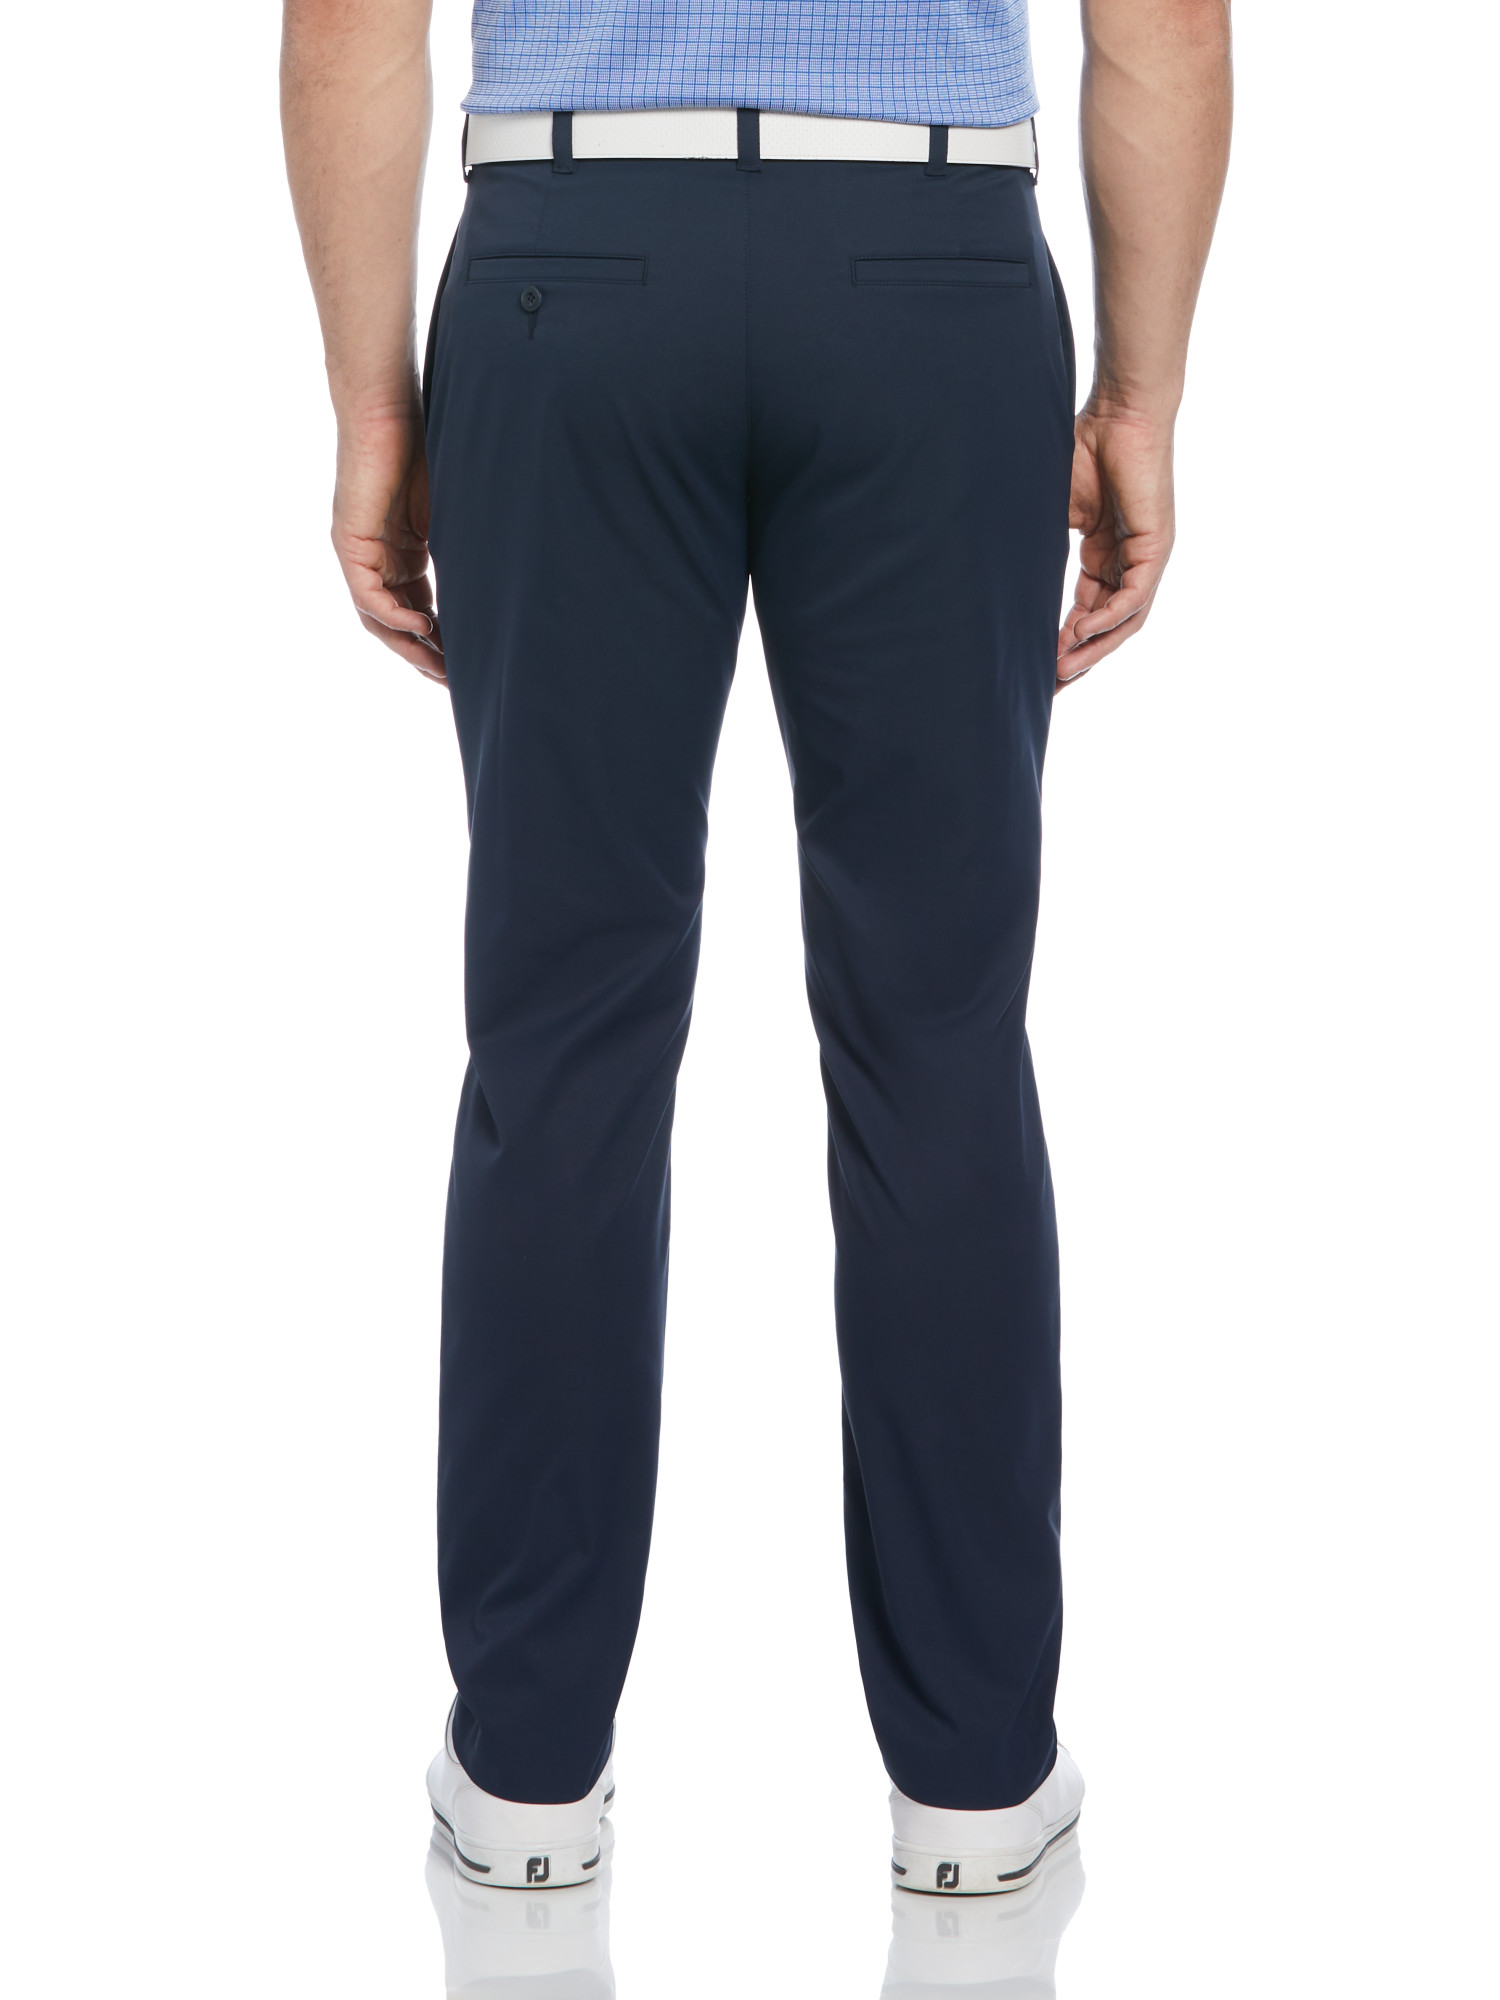 Ben Hogan Men's Flex 4-Way Stretch Golf Pants with Active Waistband, Sizes 30-50 - image 2 of 4